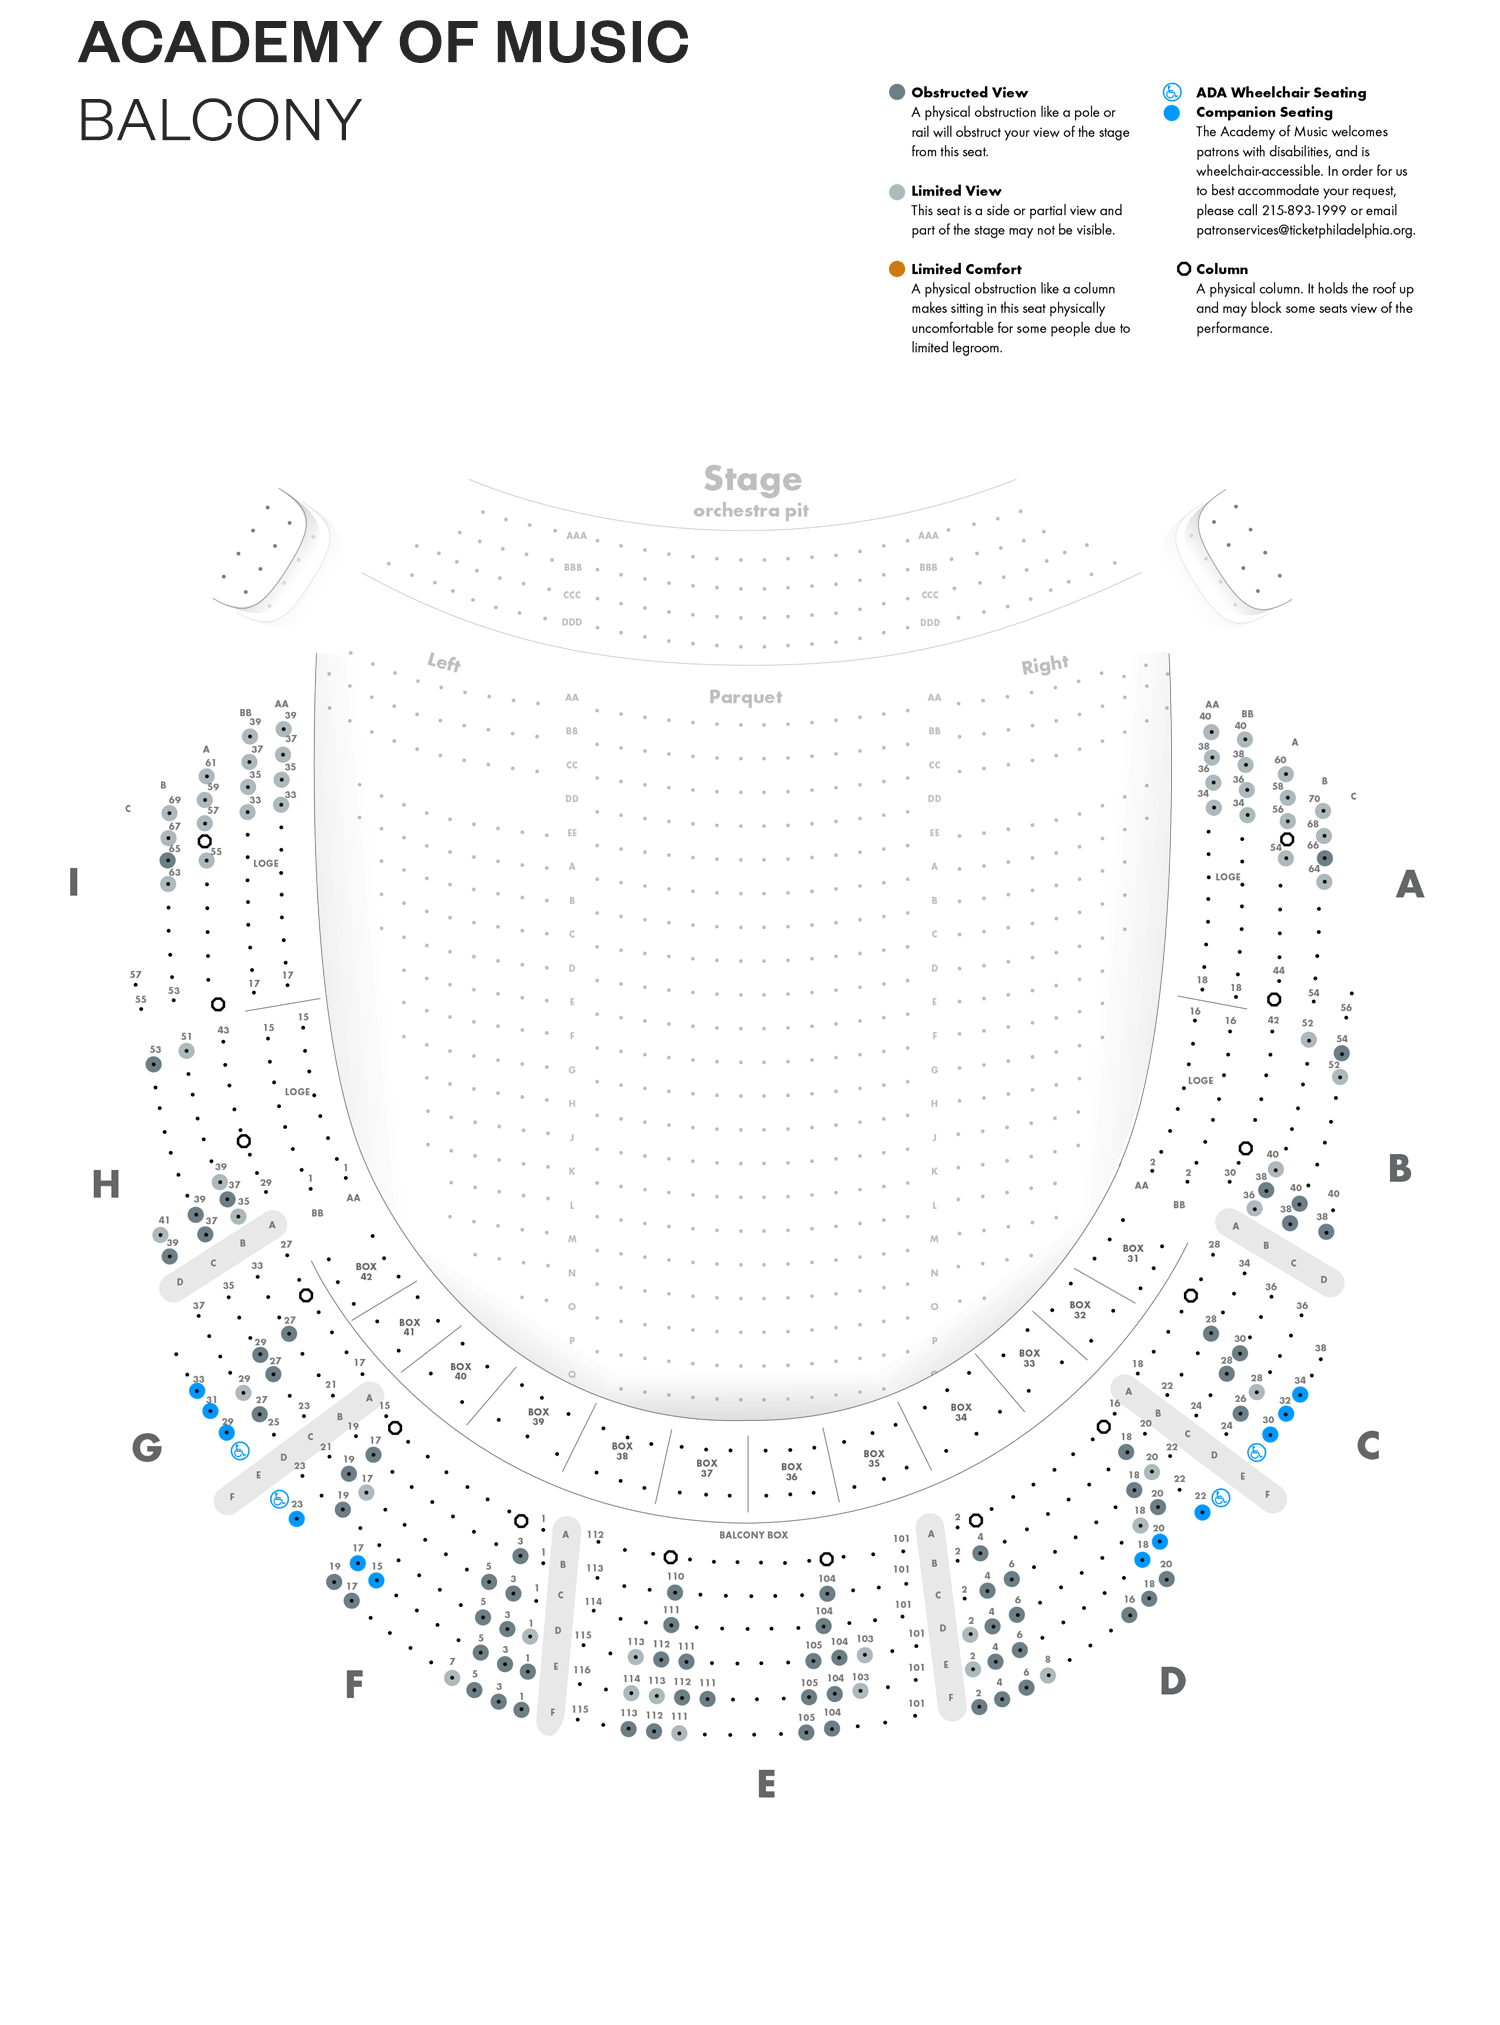 Academy of Music - Balcony - Seating Chart